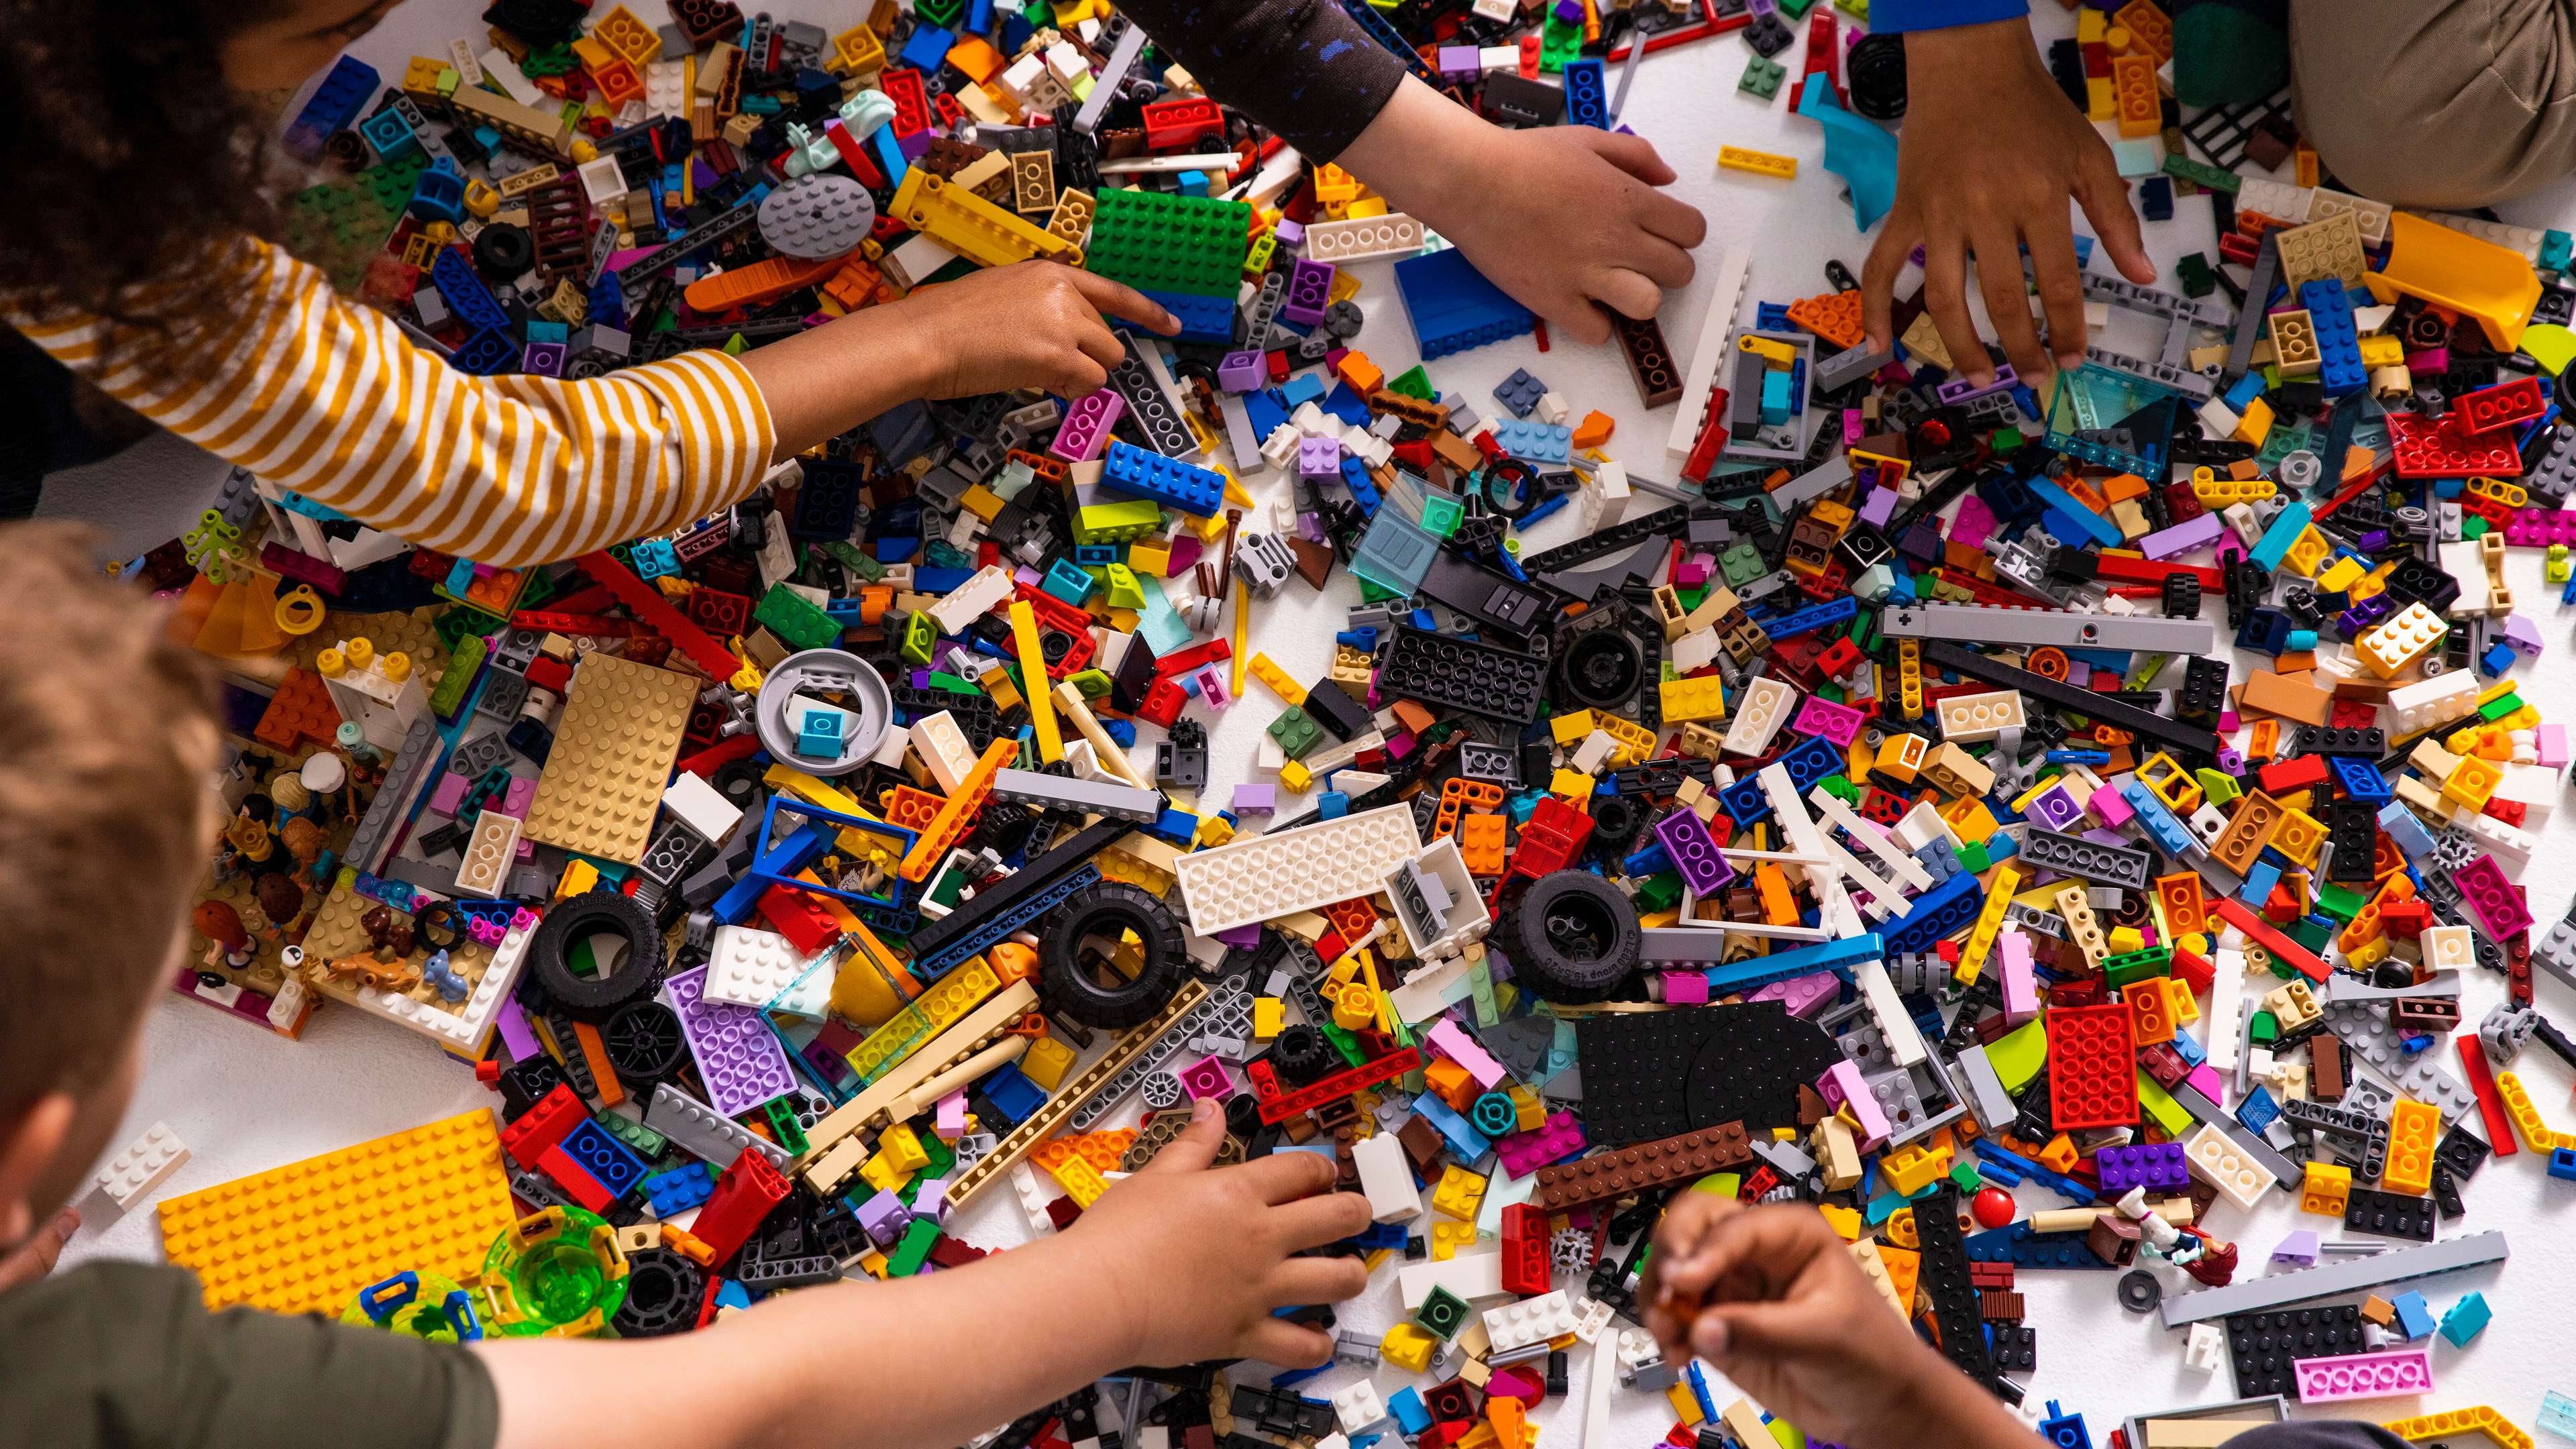 Five children pick bricks to create their own LEGO creations.